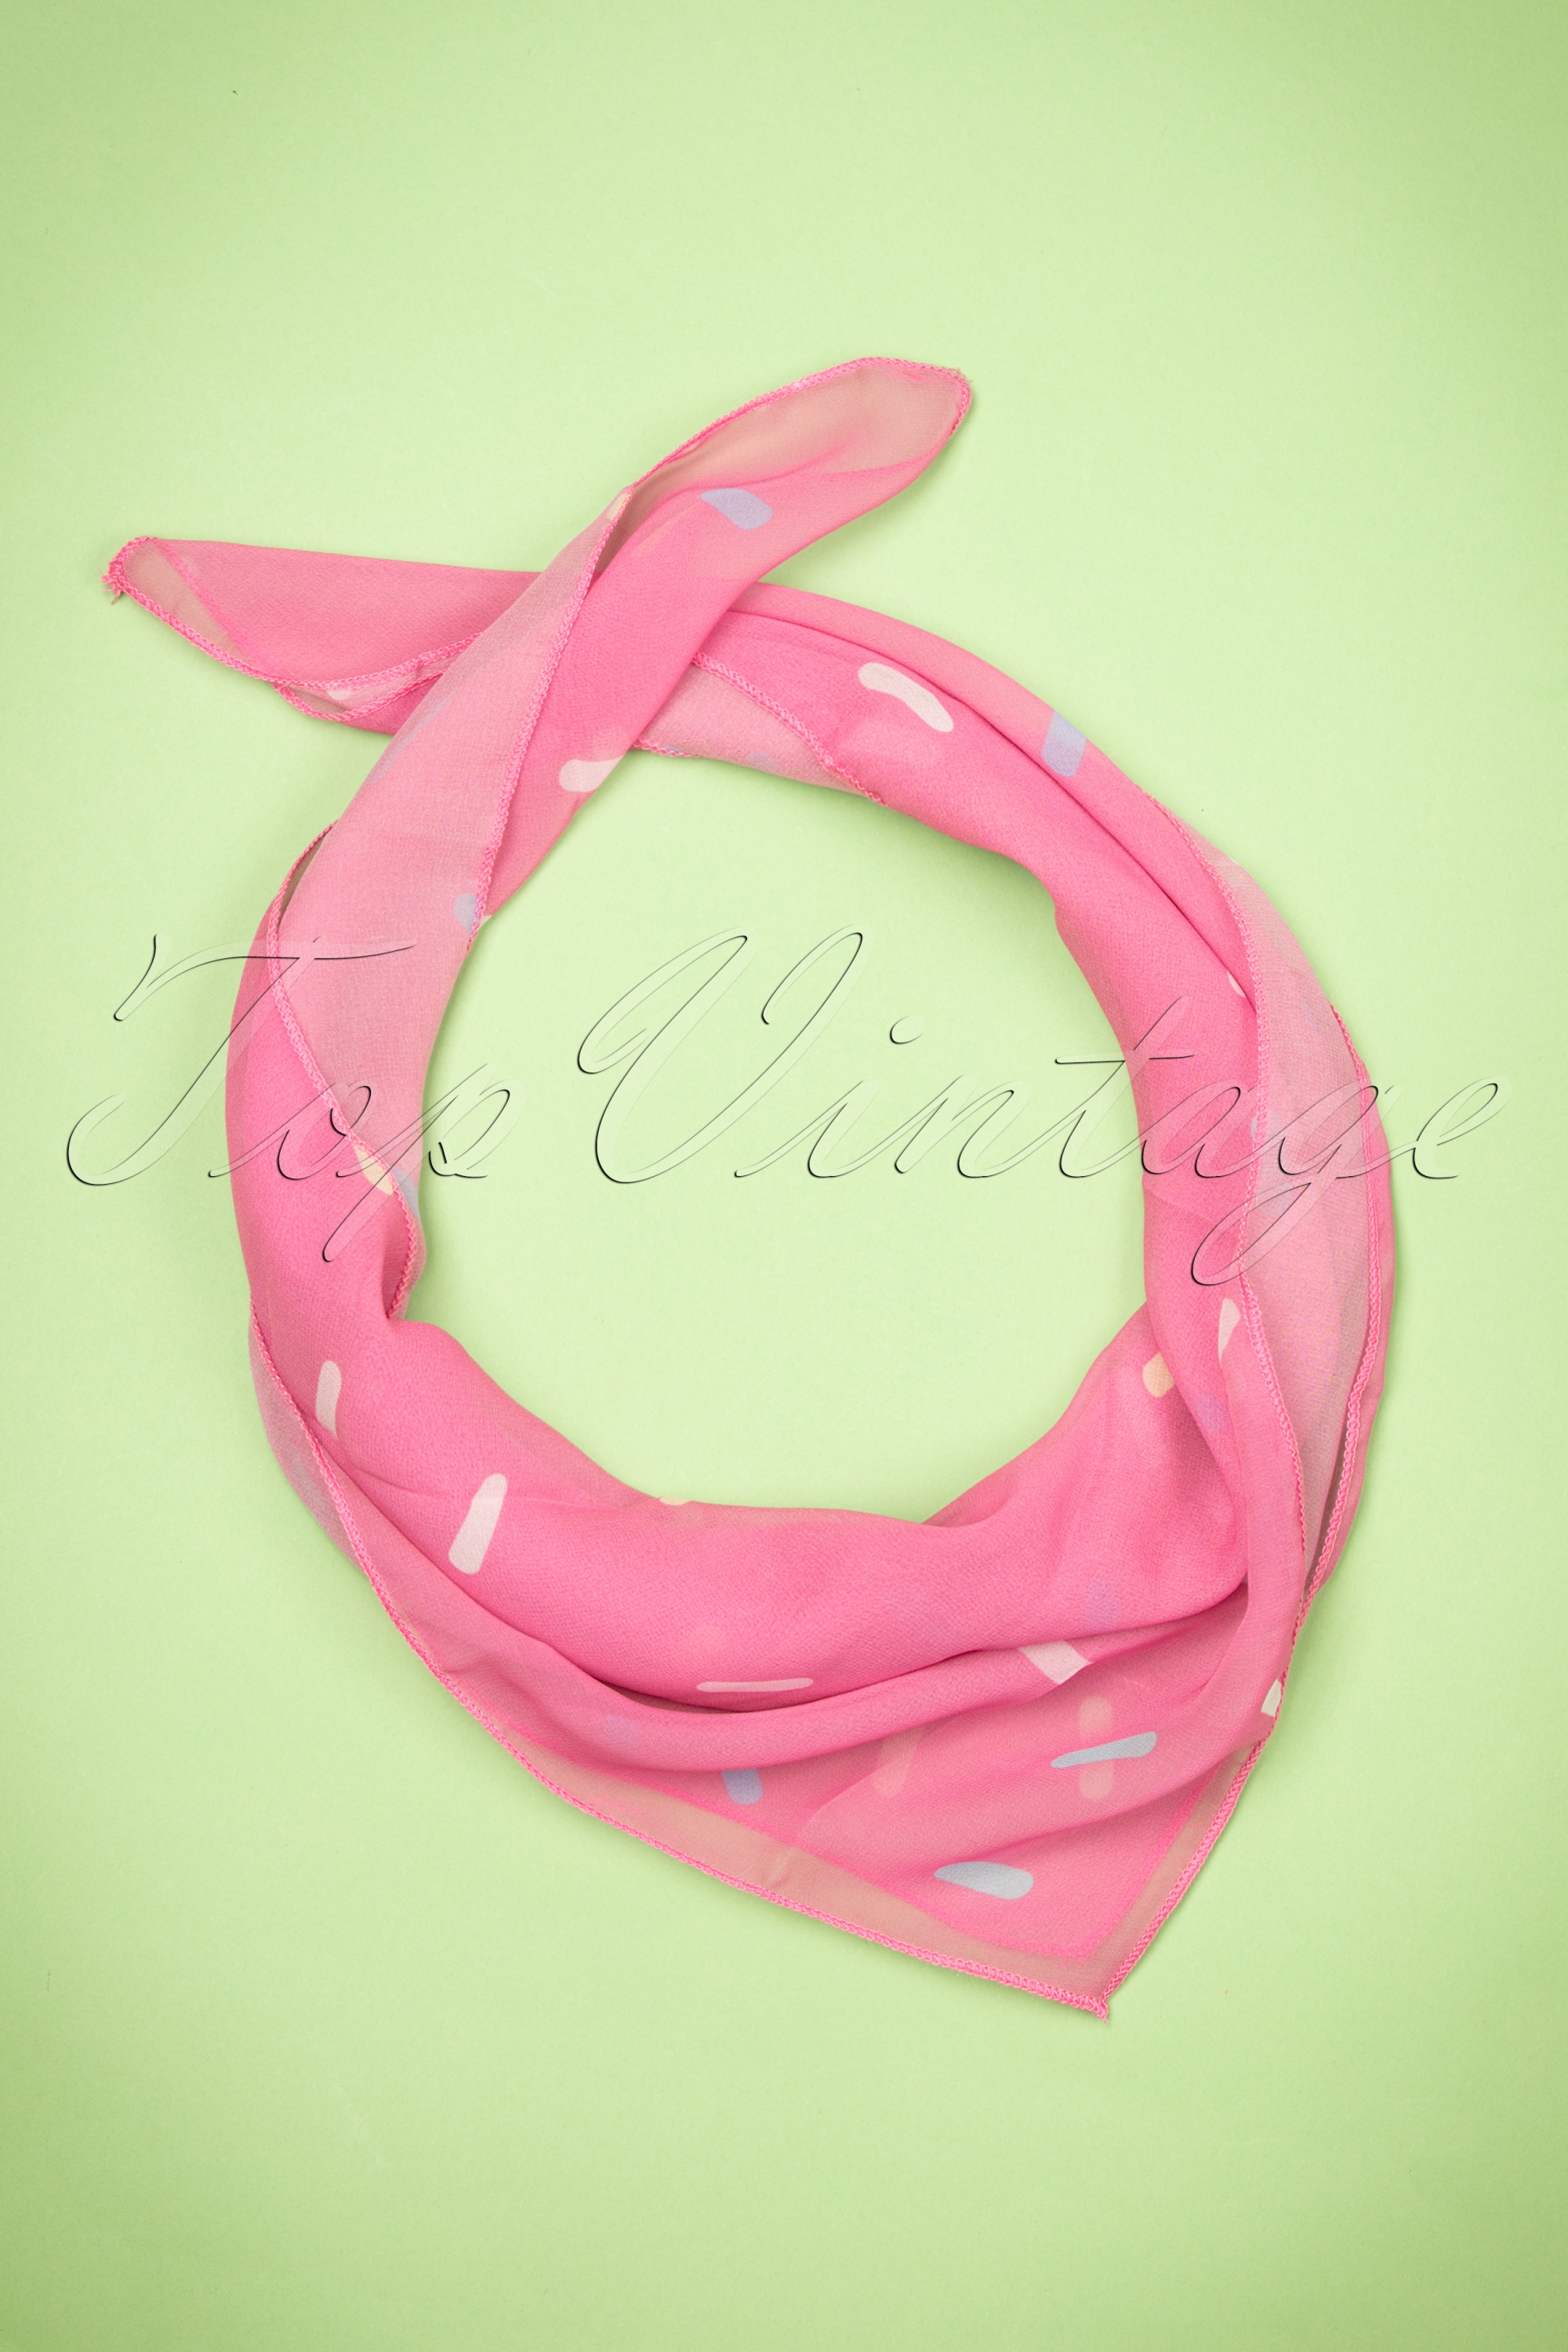 Collectif Clothing - Hagelslag Bandana in roze